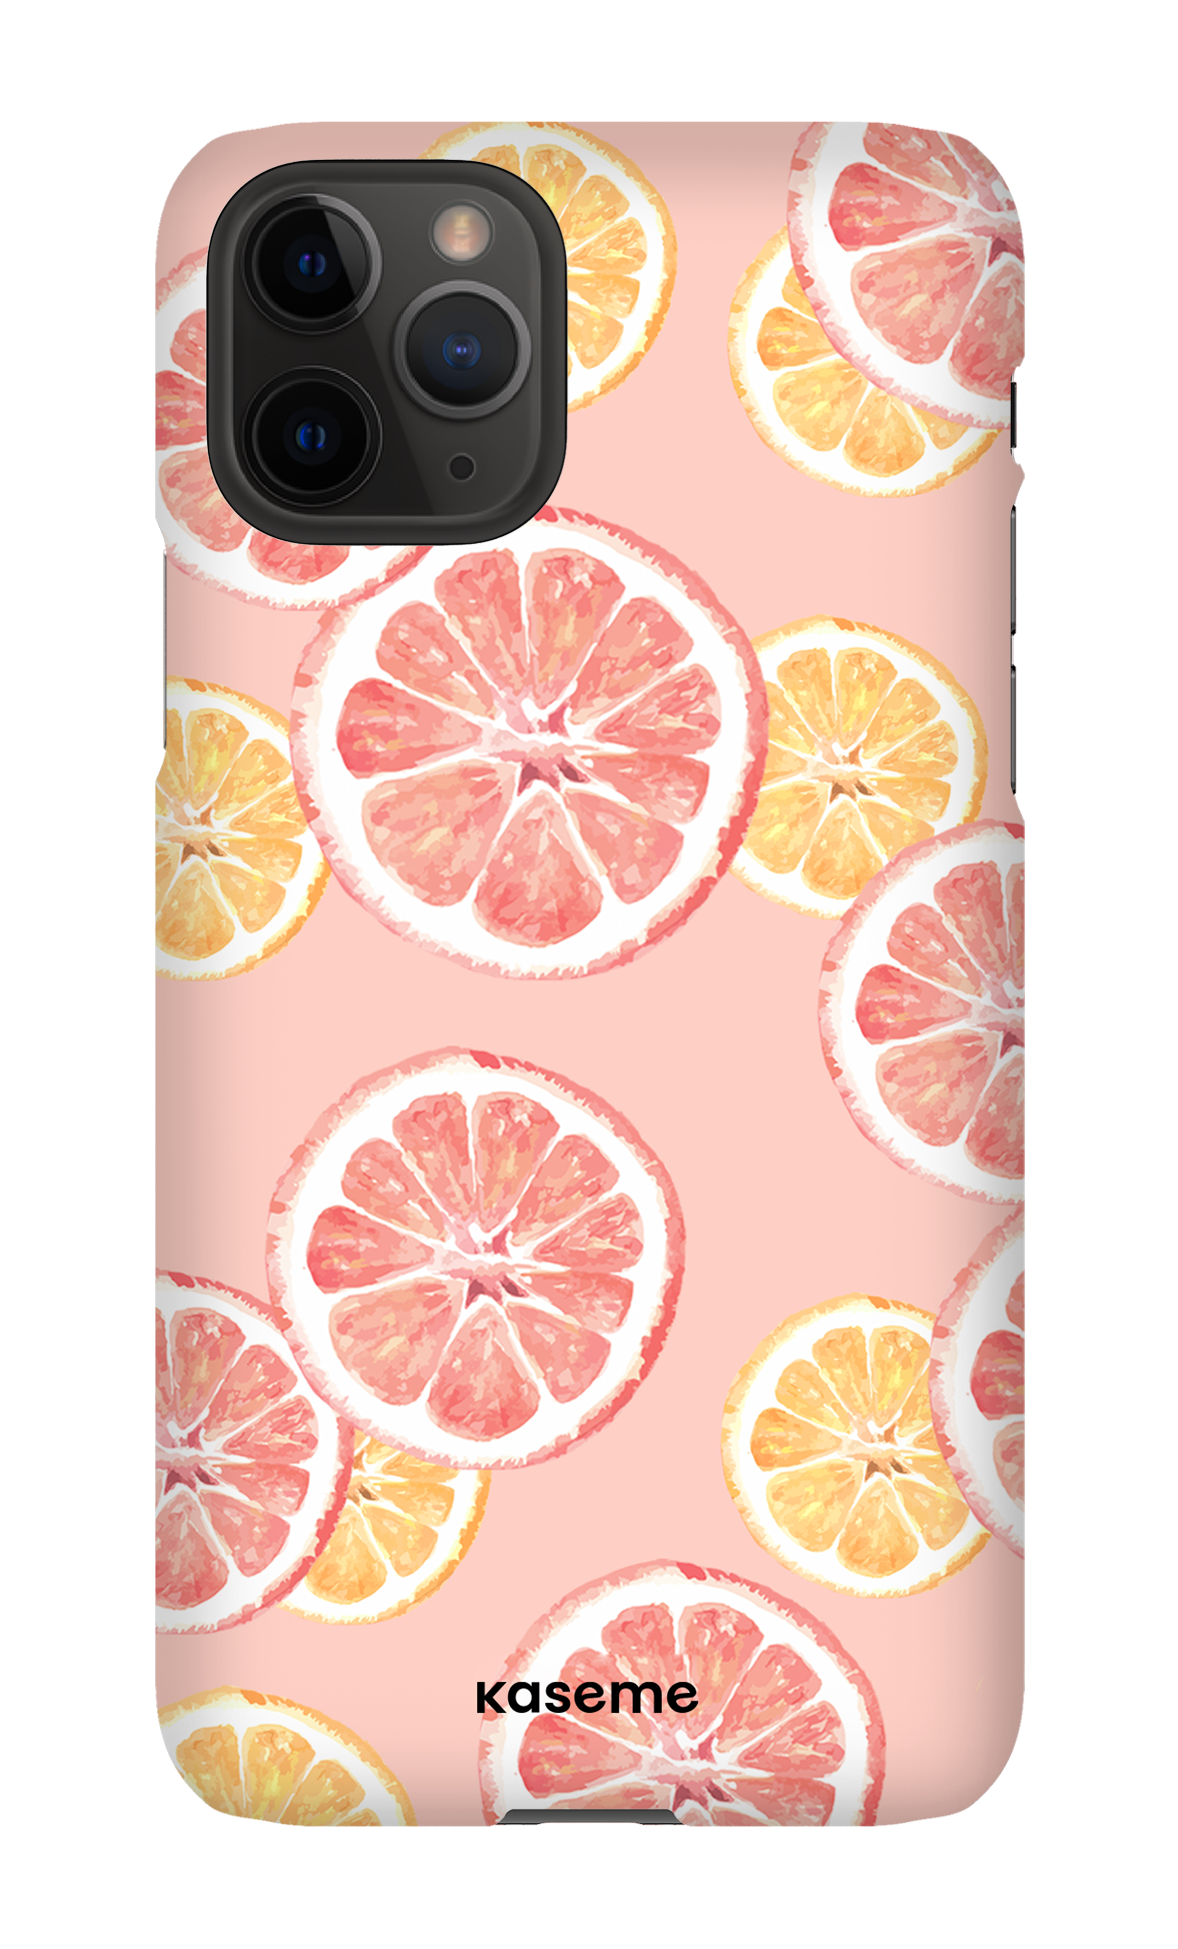 Pink Lemonade phone case - iPhone 11 Pro